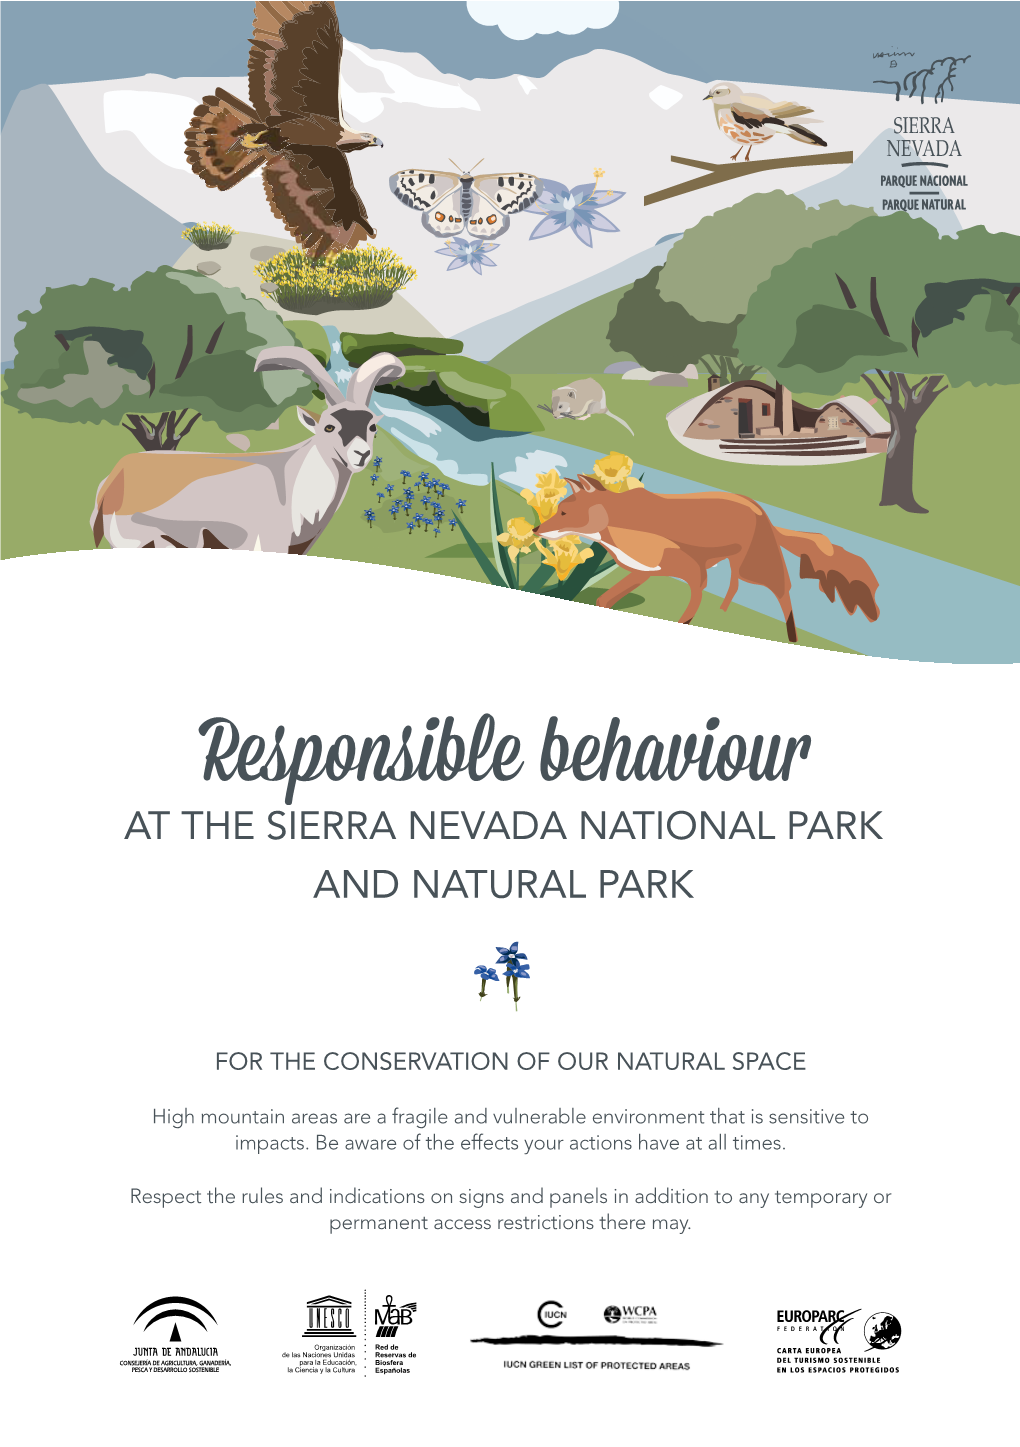 Responsible Behaviour at the SIERRA NEVADA NATIONAL PARK and NATURAL PARK